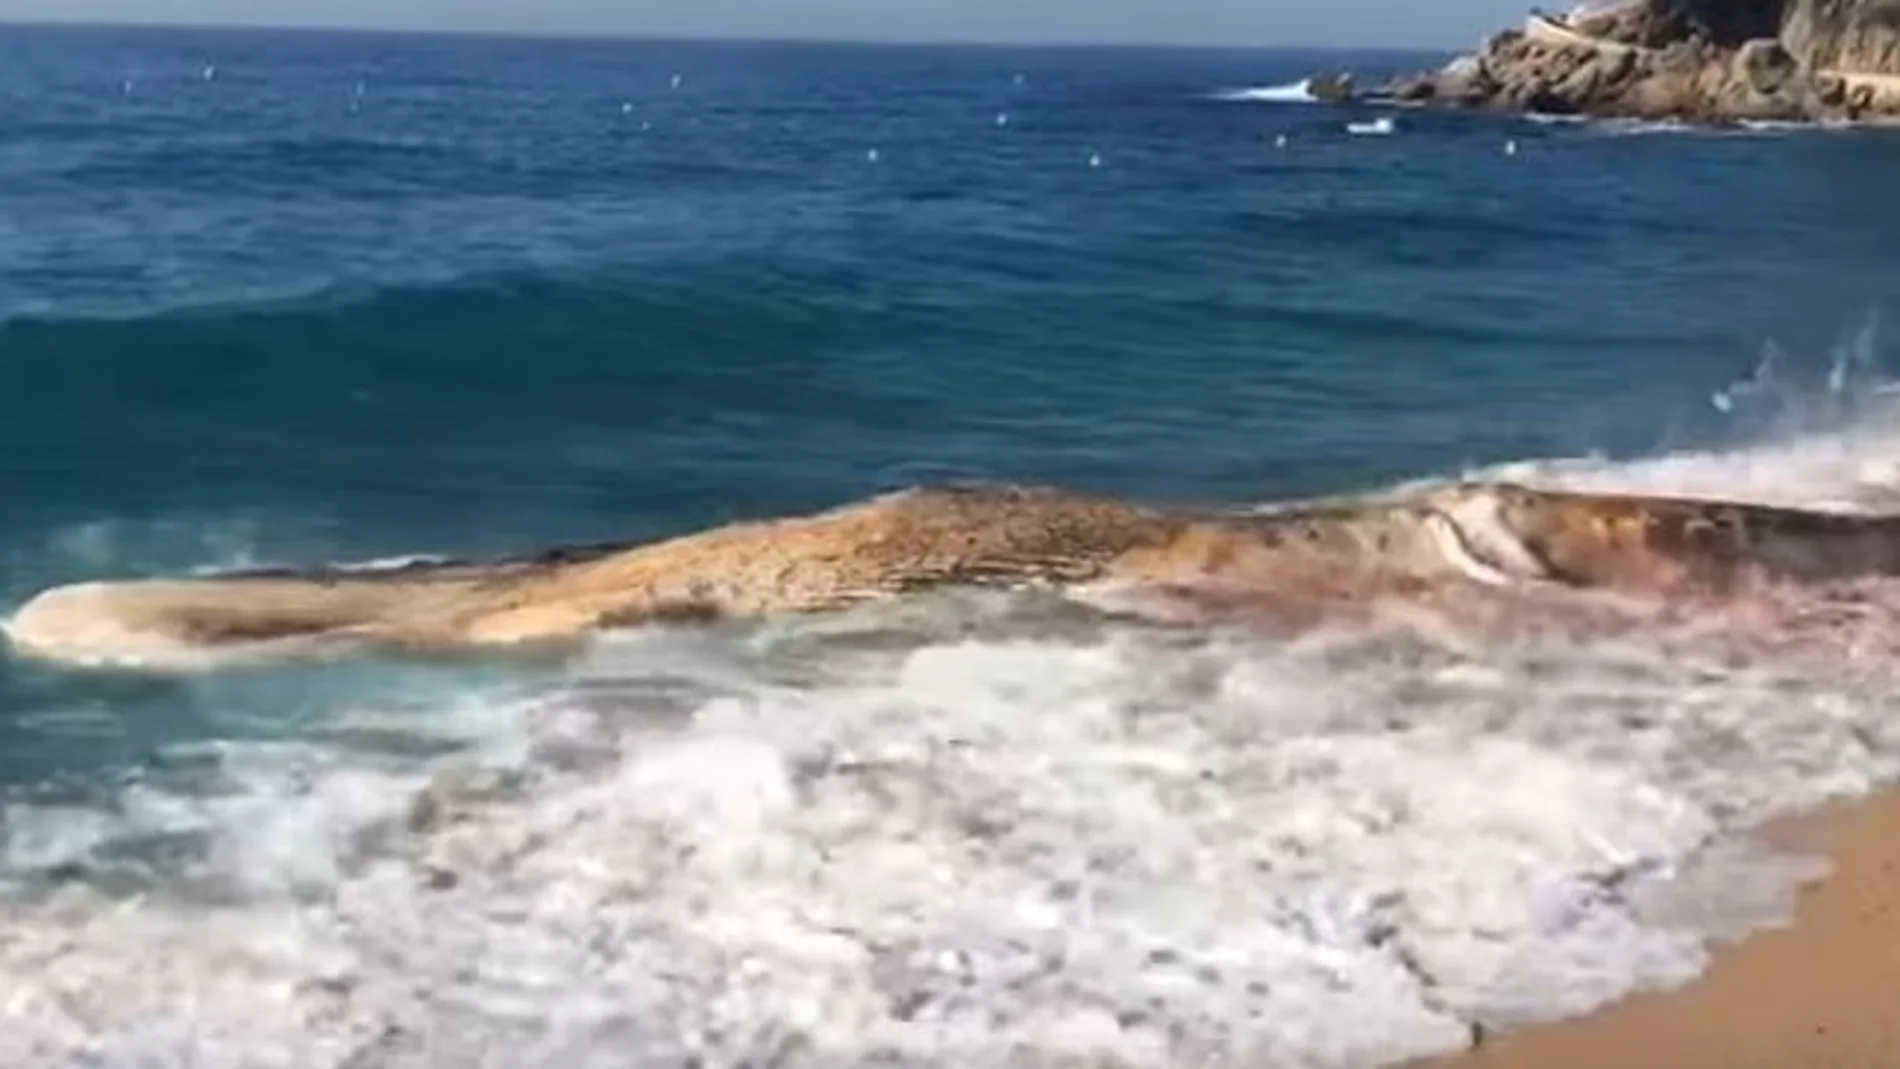 Aparece una ballena muerta en una playa de Lloret